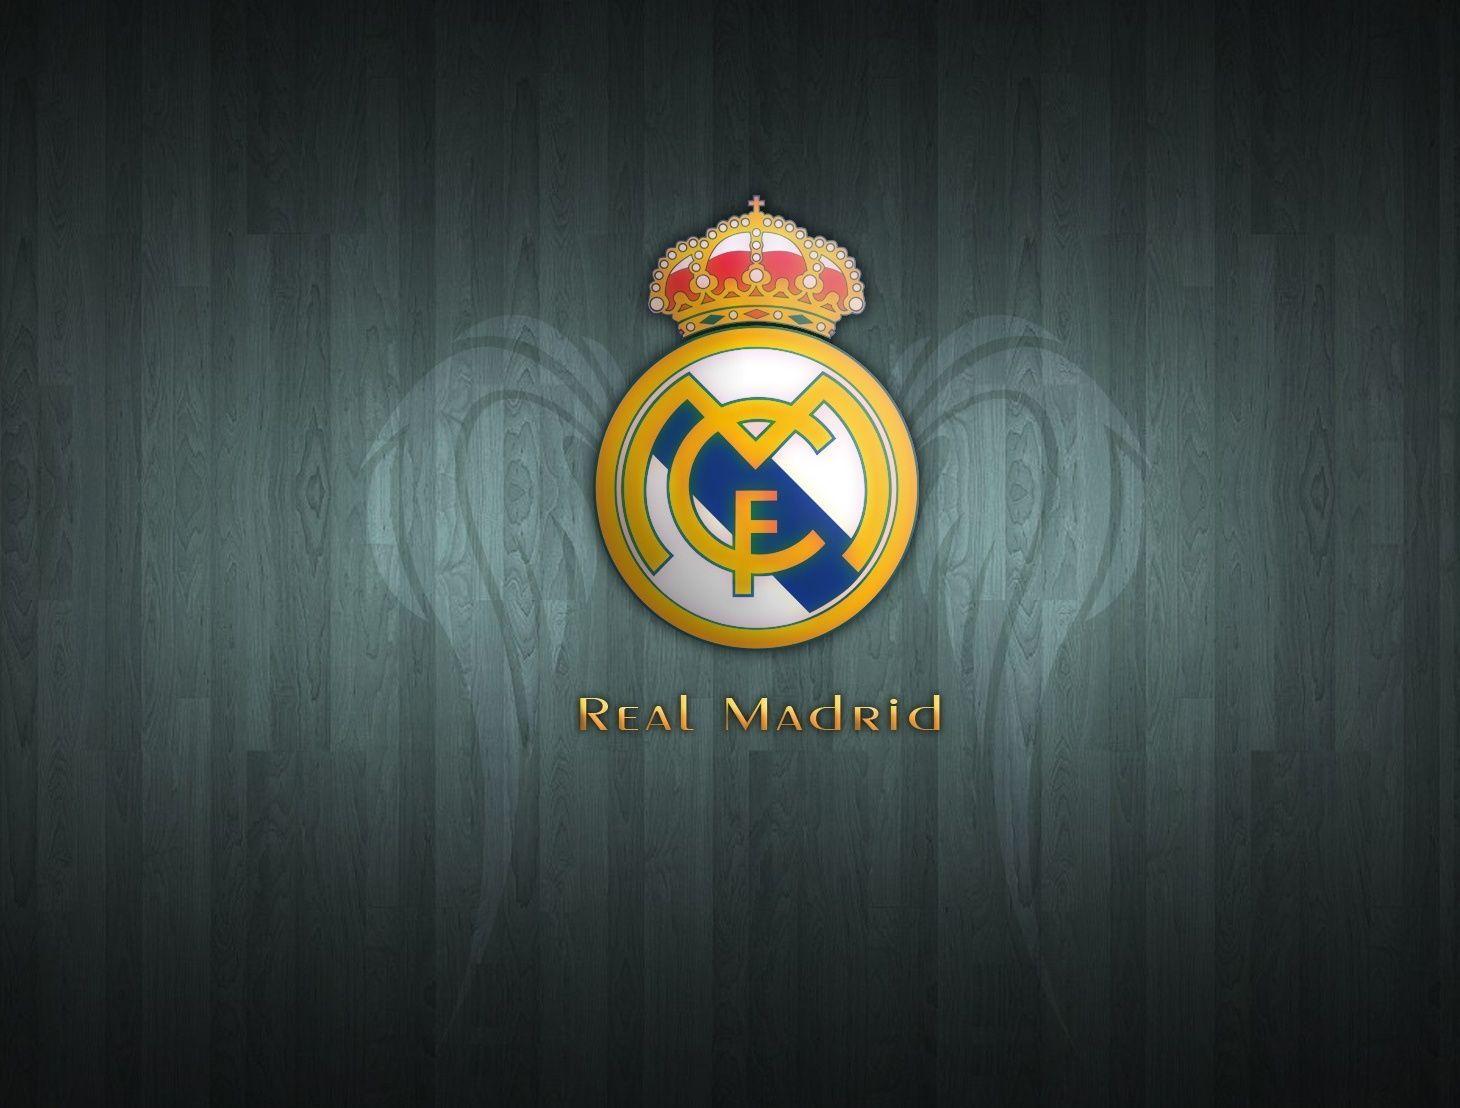 Real Madrid Club De Fútbol Madrid España Wallpaper Wallpaper HD. Real madrid logo wallpaper, Real madrid wallpaper, Madrid wallpaper